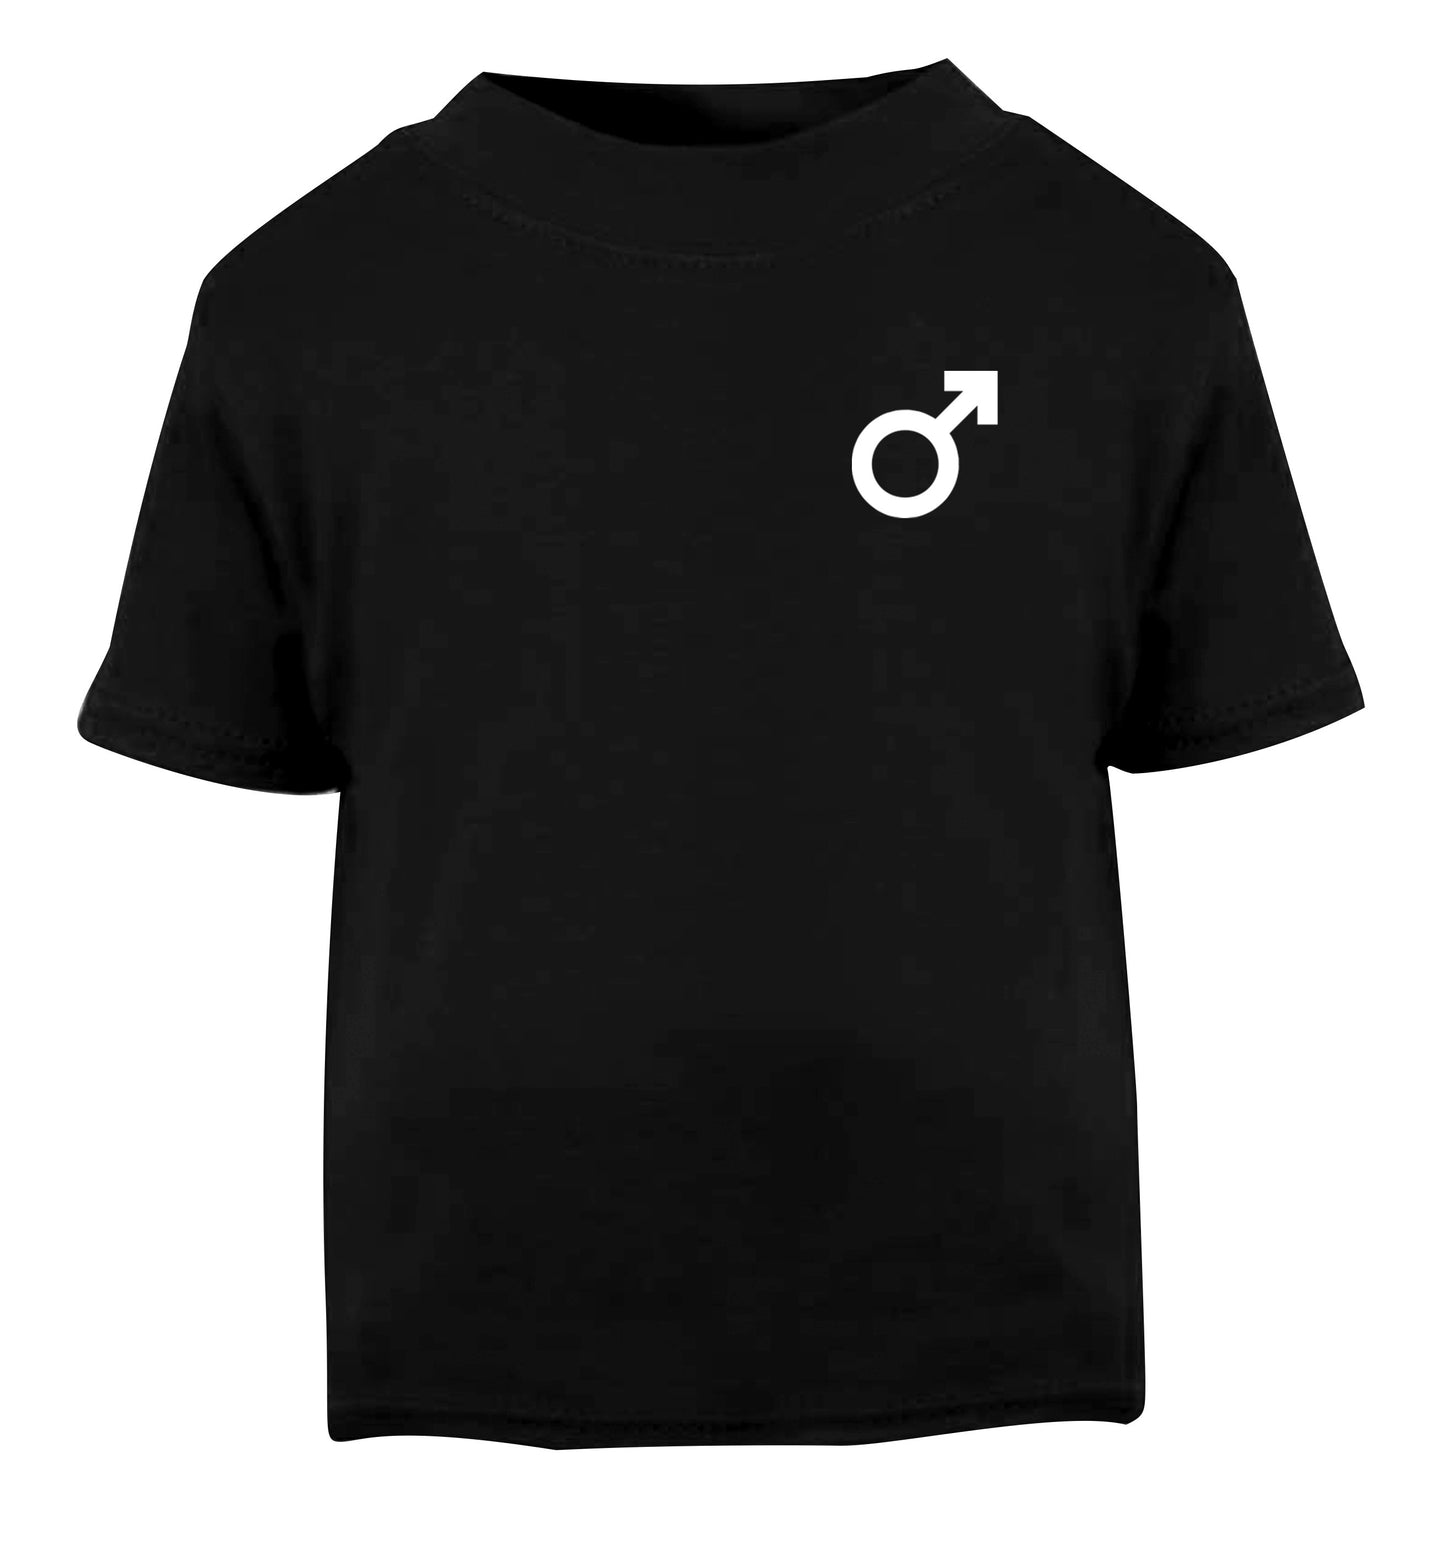 Male symbol pocket Black Baby Toddler Tshirt 2 years